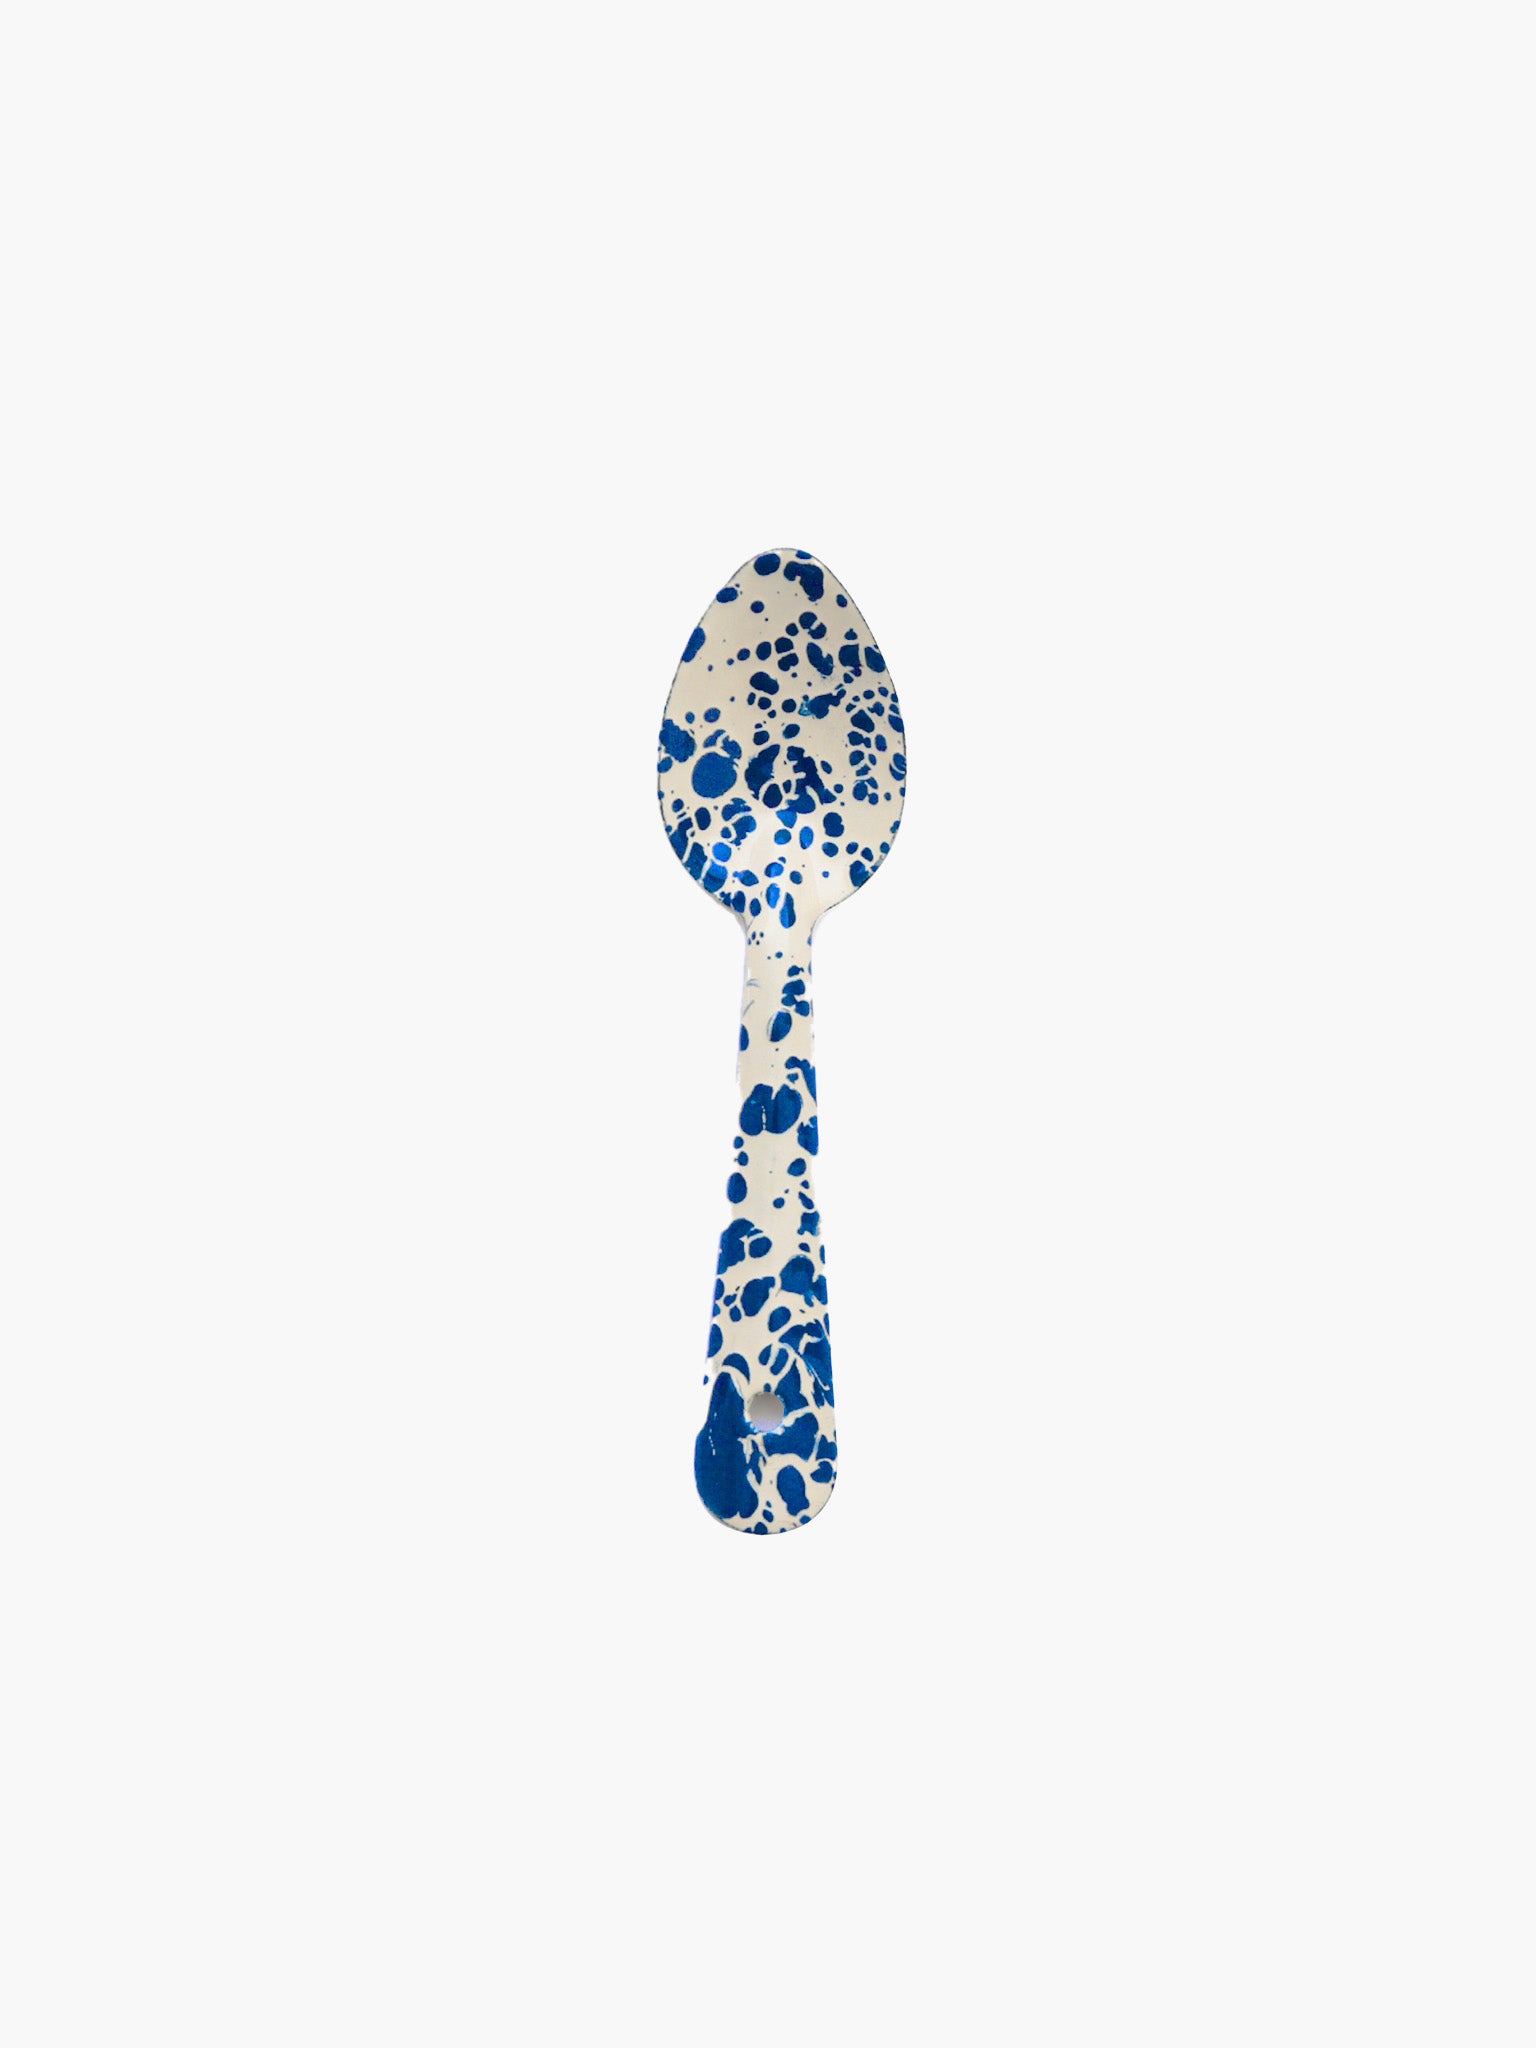 Splatter Small Spoon (15cm) - Navy and Cream